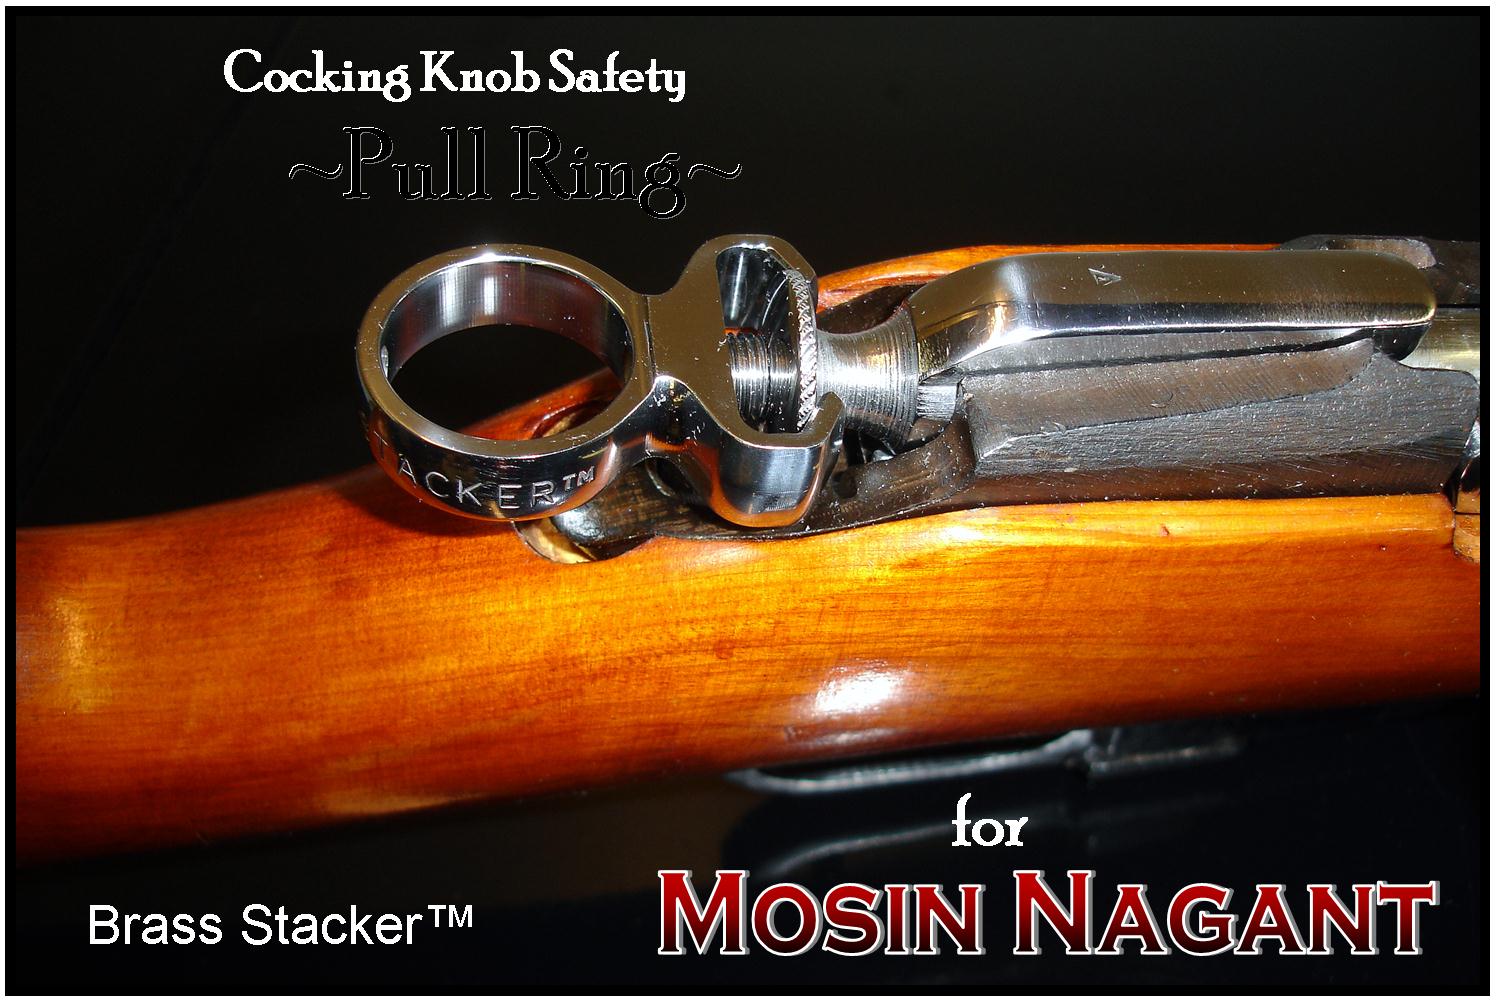 Brass Stacker™ Mosin Nagant Cocking Knob Safety Pull Ring